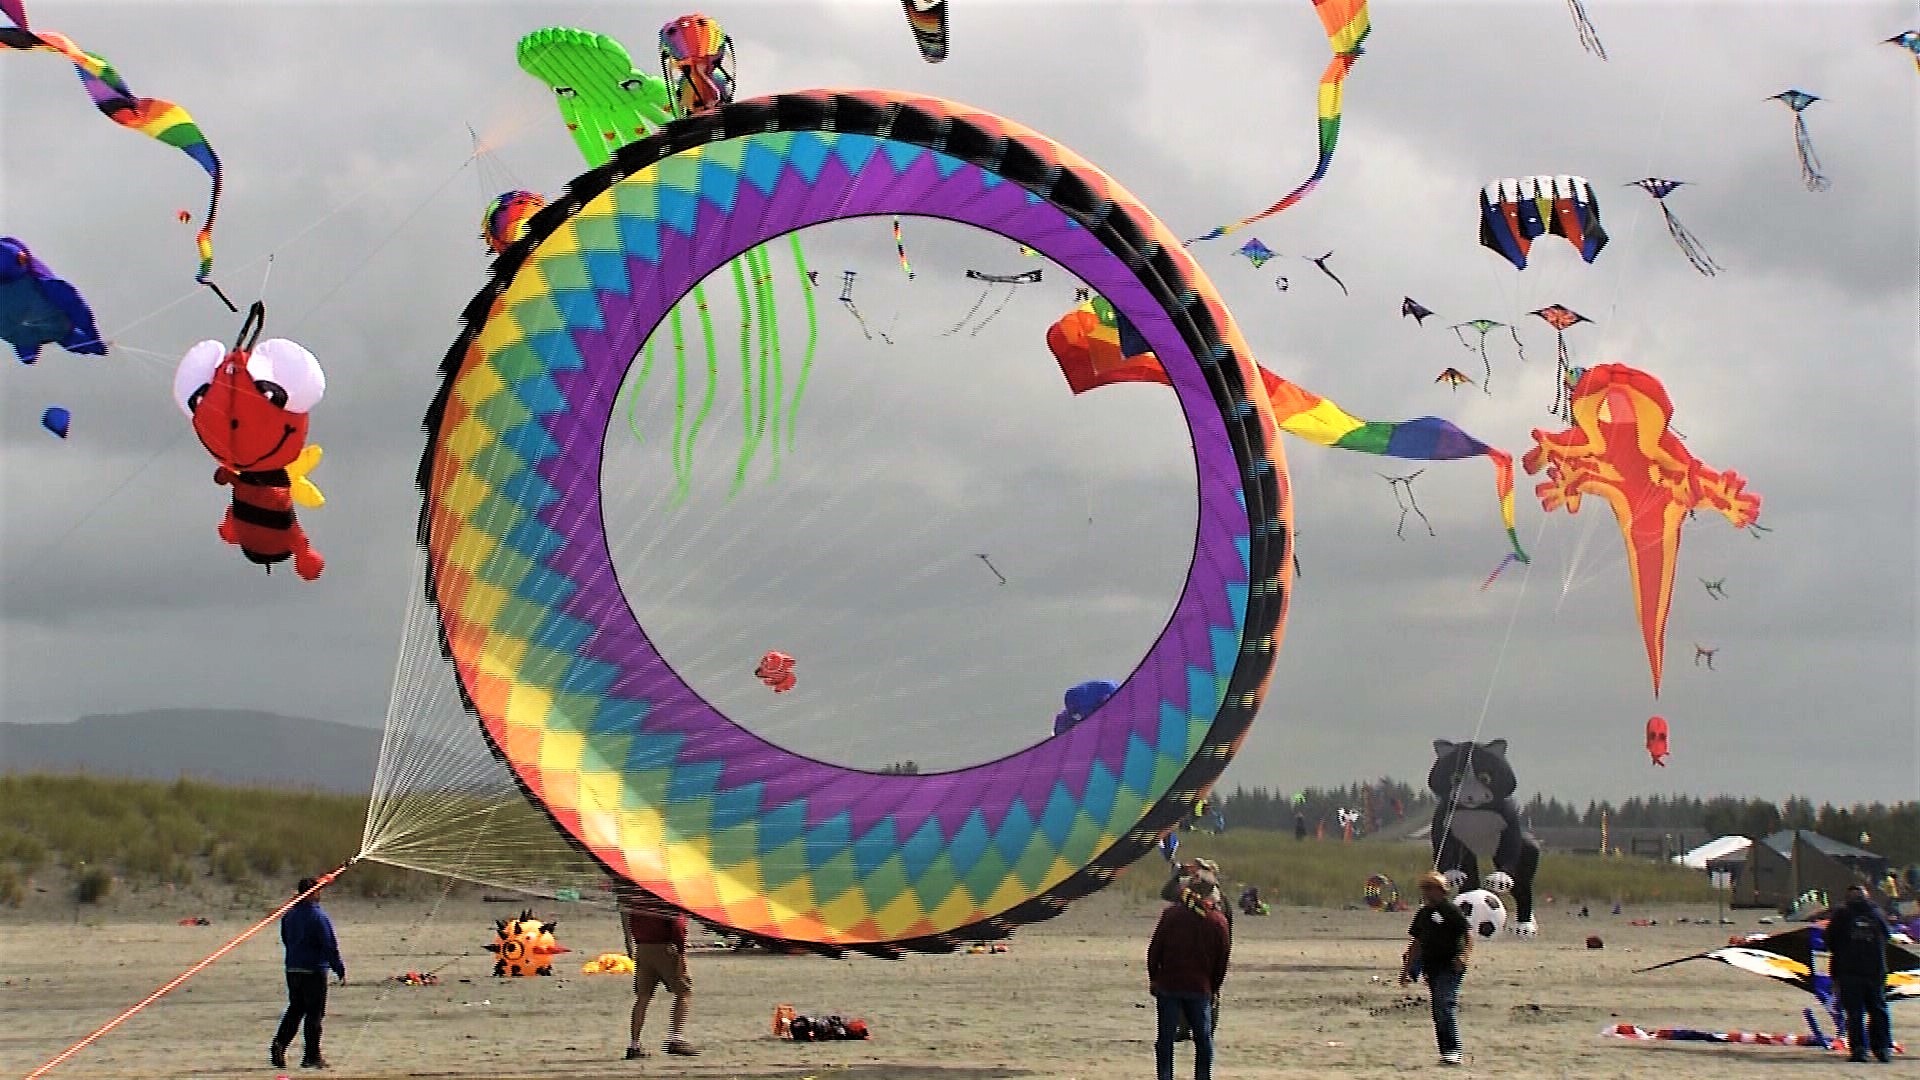 The Washington State International Kite Festival in Long Beach is fun